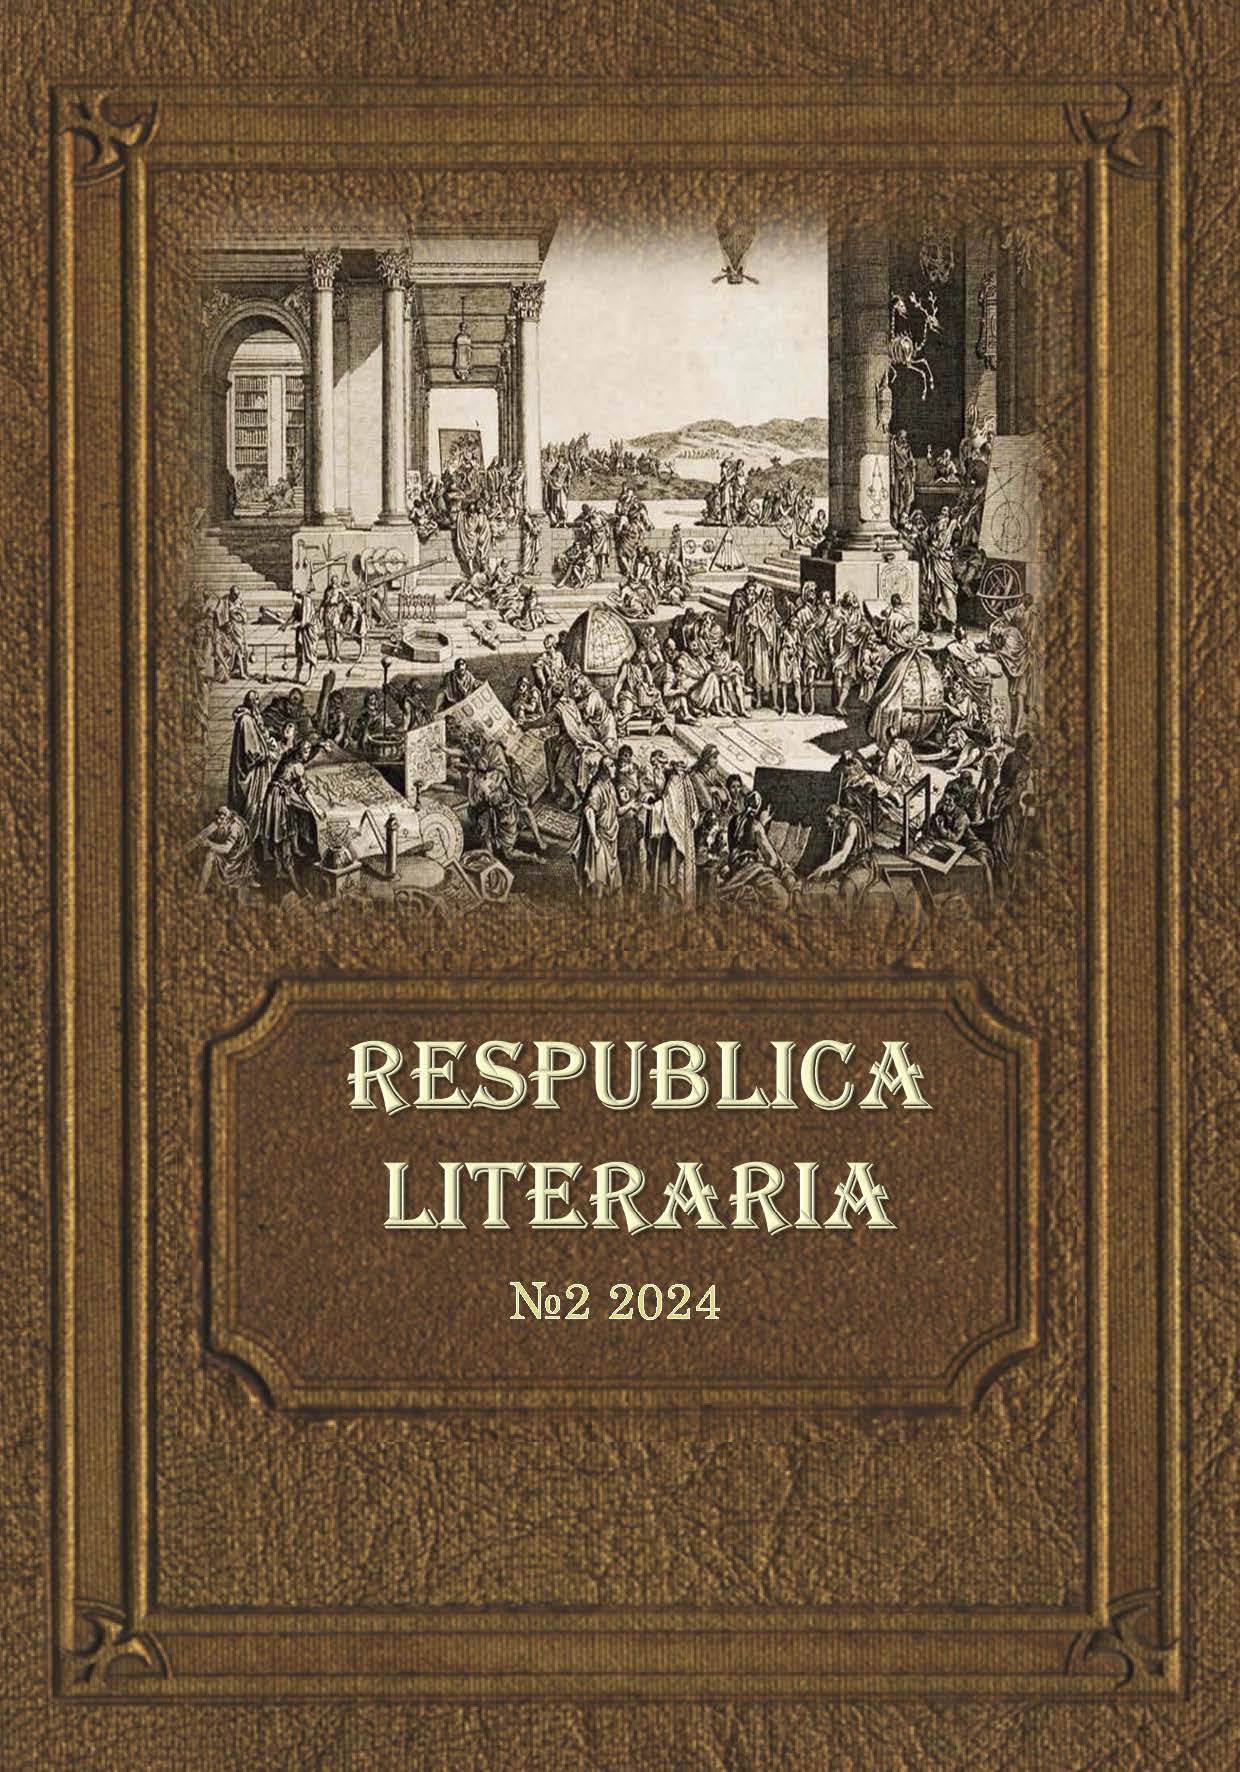 					View Vol. 5 No. 2 (2024): Respublica Literaria
				